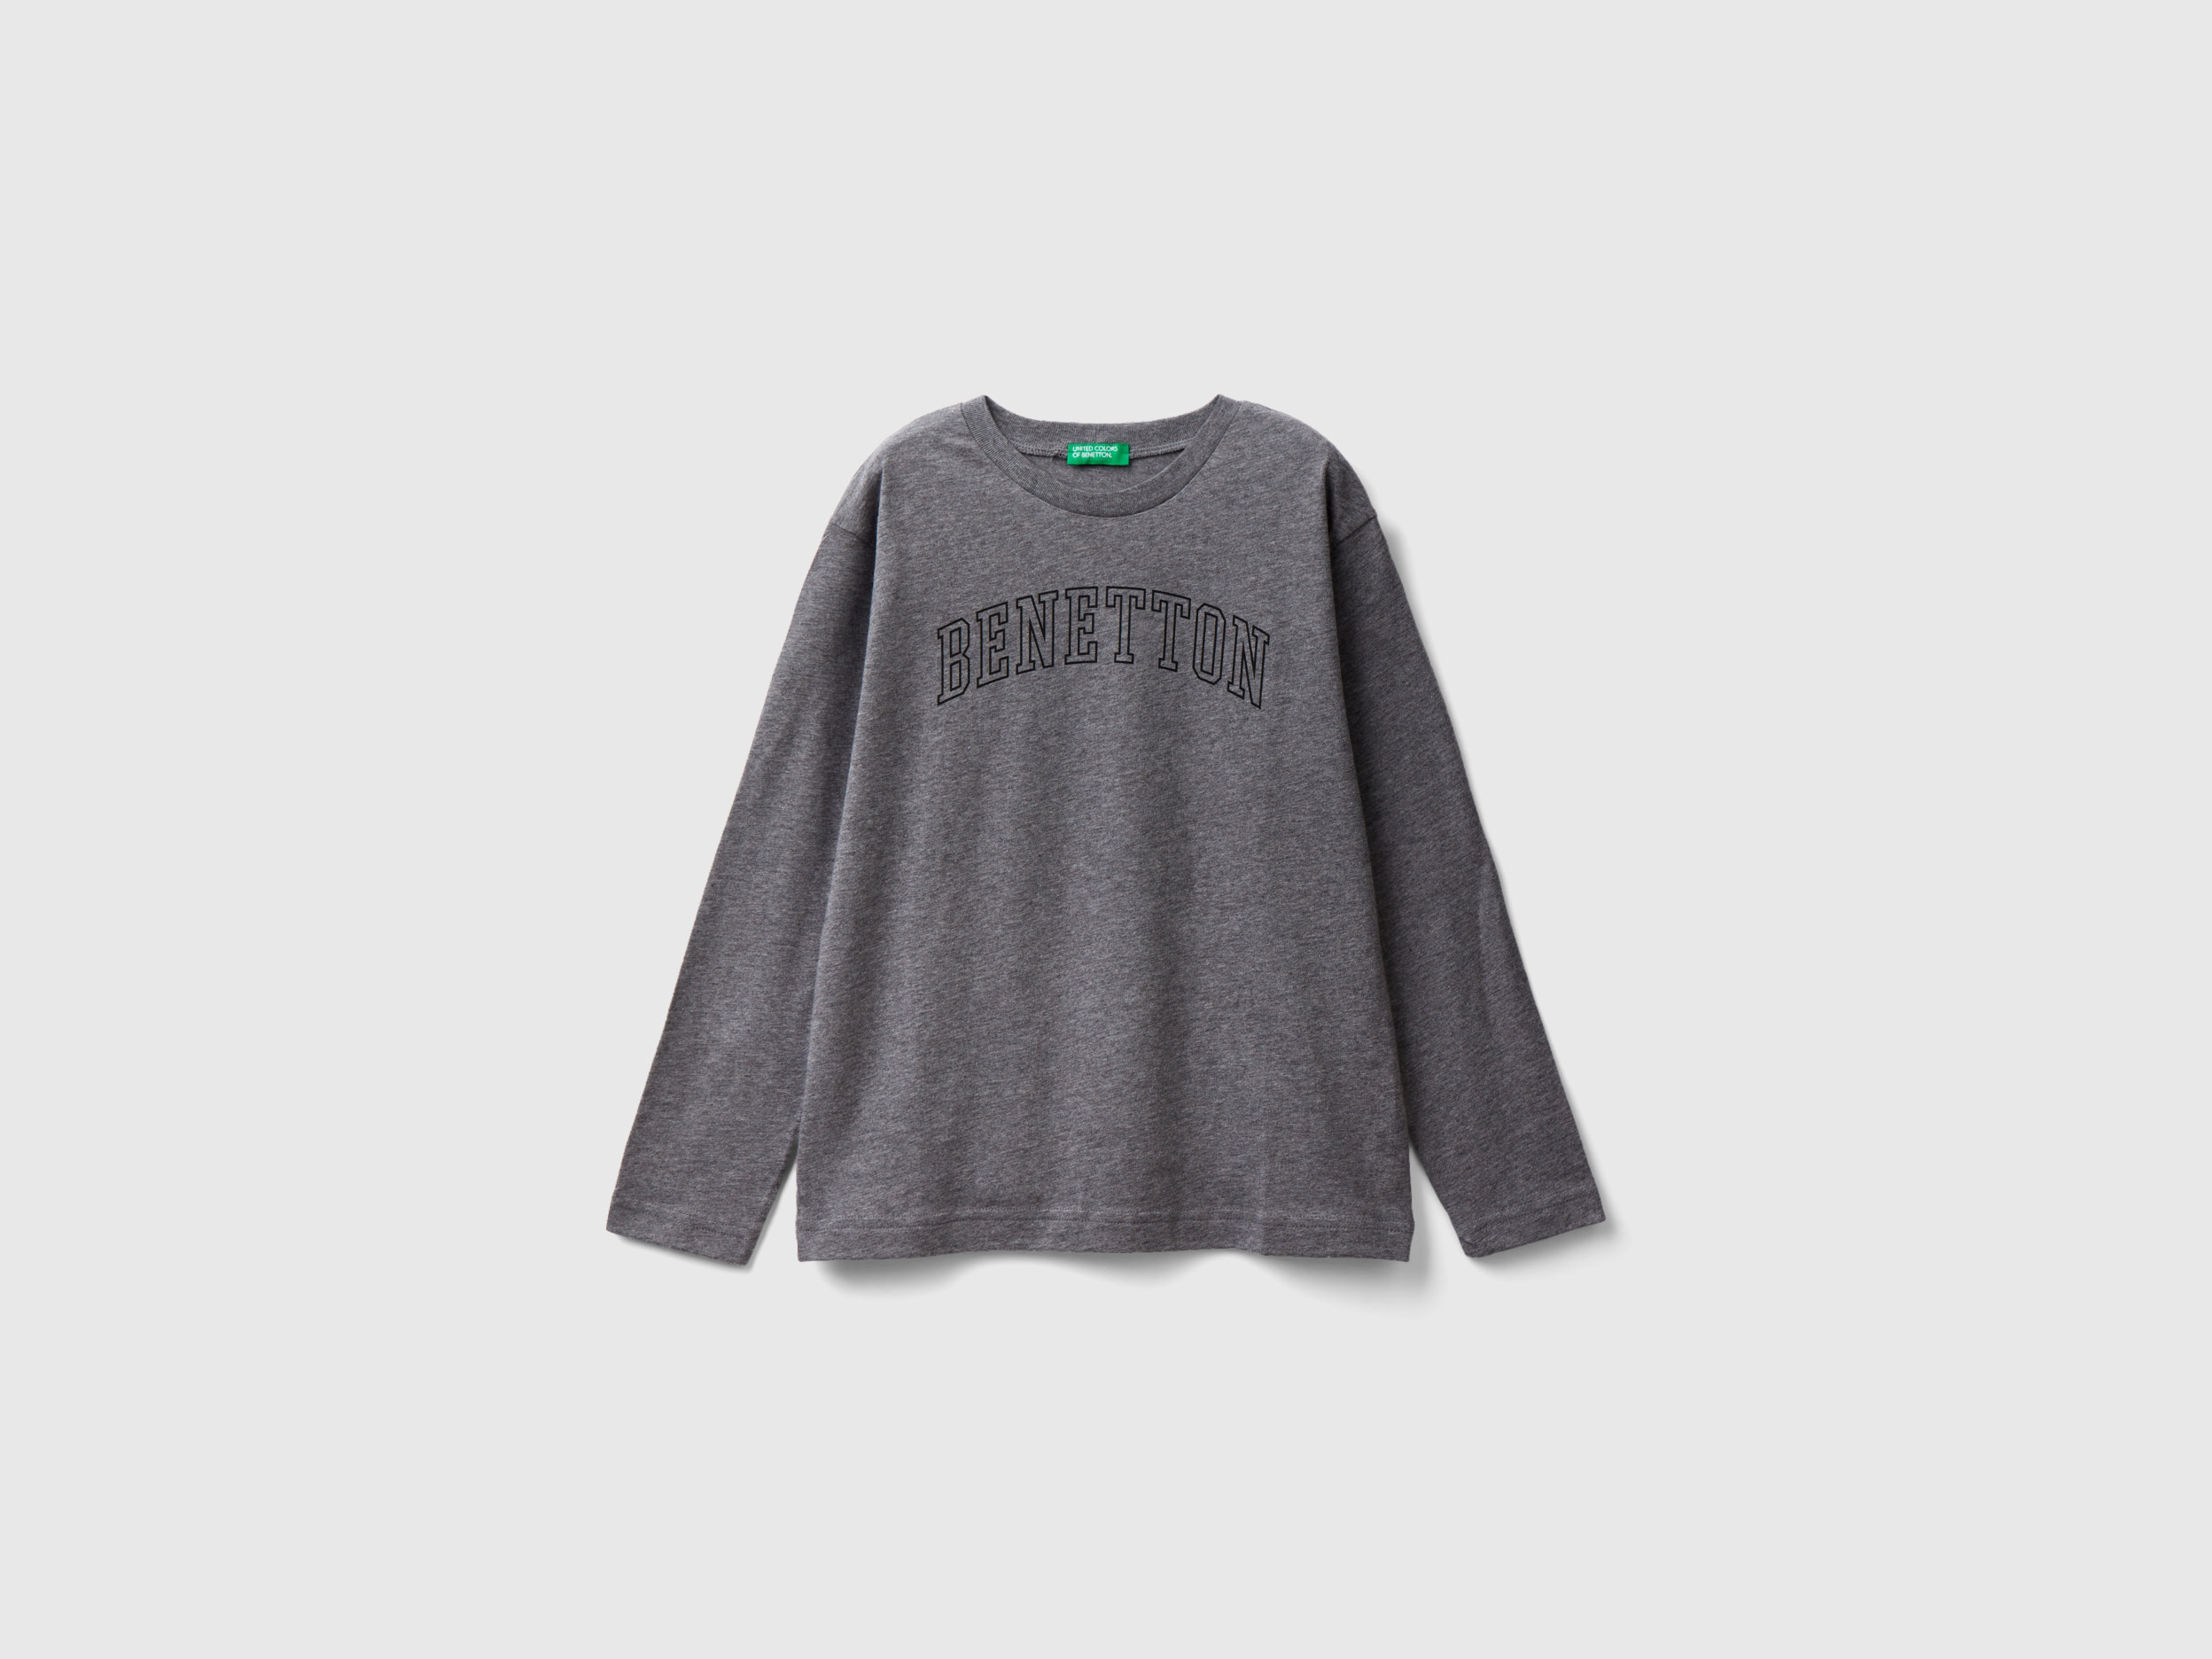 Benetton, Long Sleeve T-shirt With Logo, size 3XL, Dark Gray, Kids